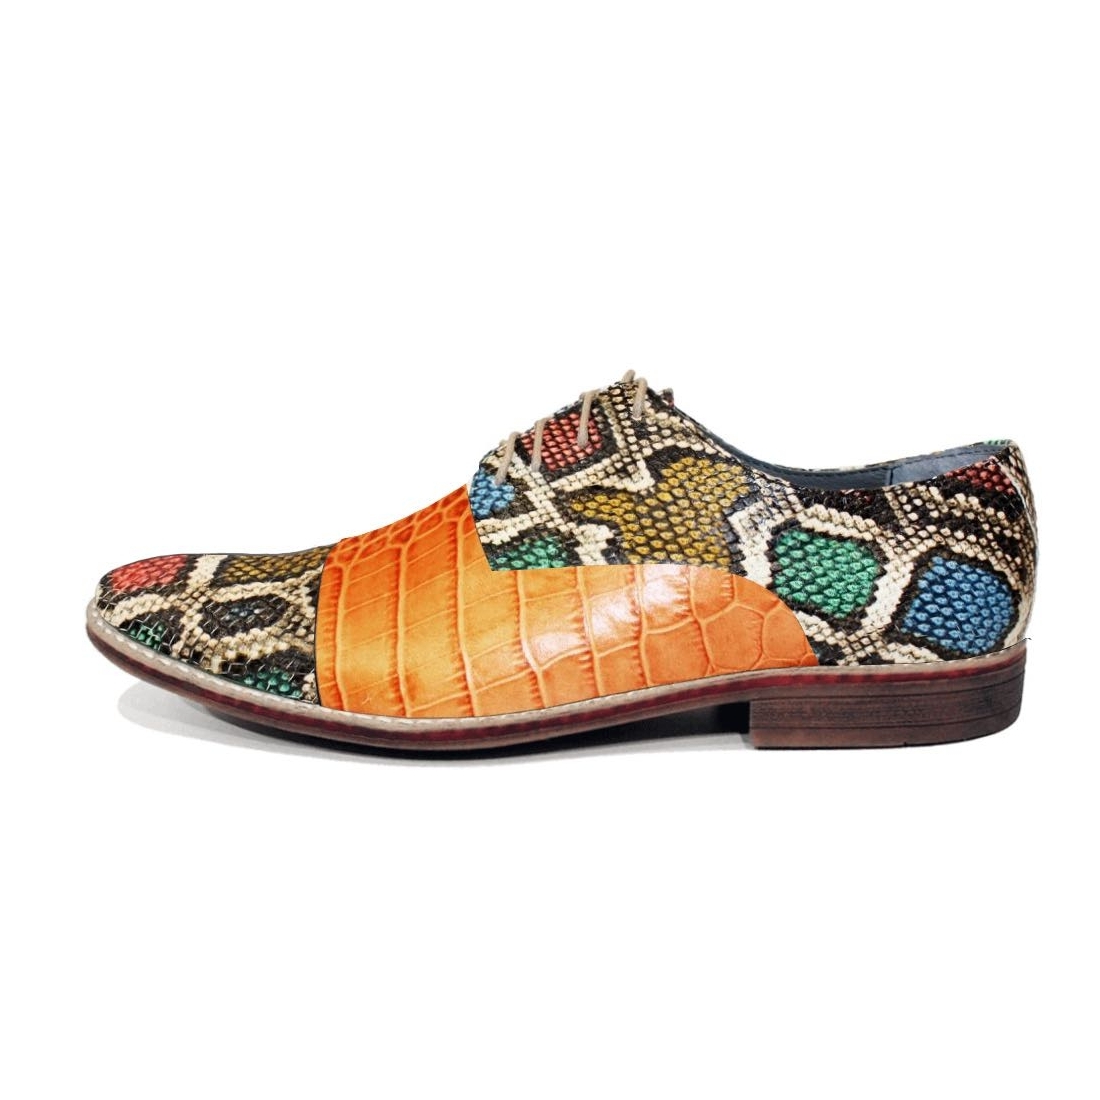 Modello Gadello - Classic Shoes - Handmade Colorful Italian Leather Shoes